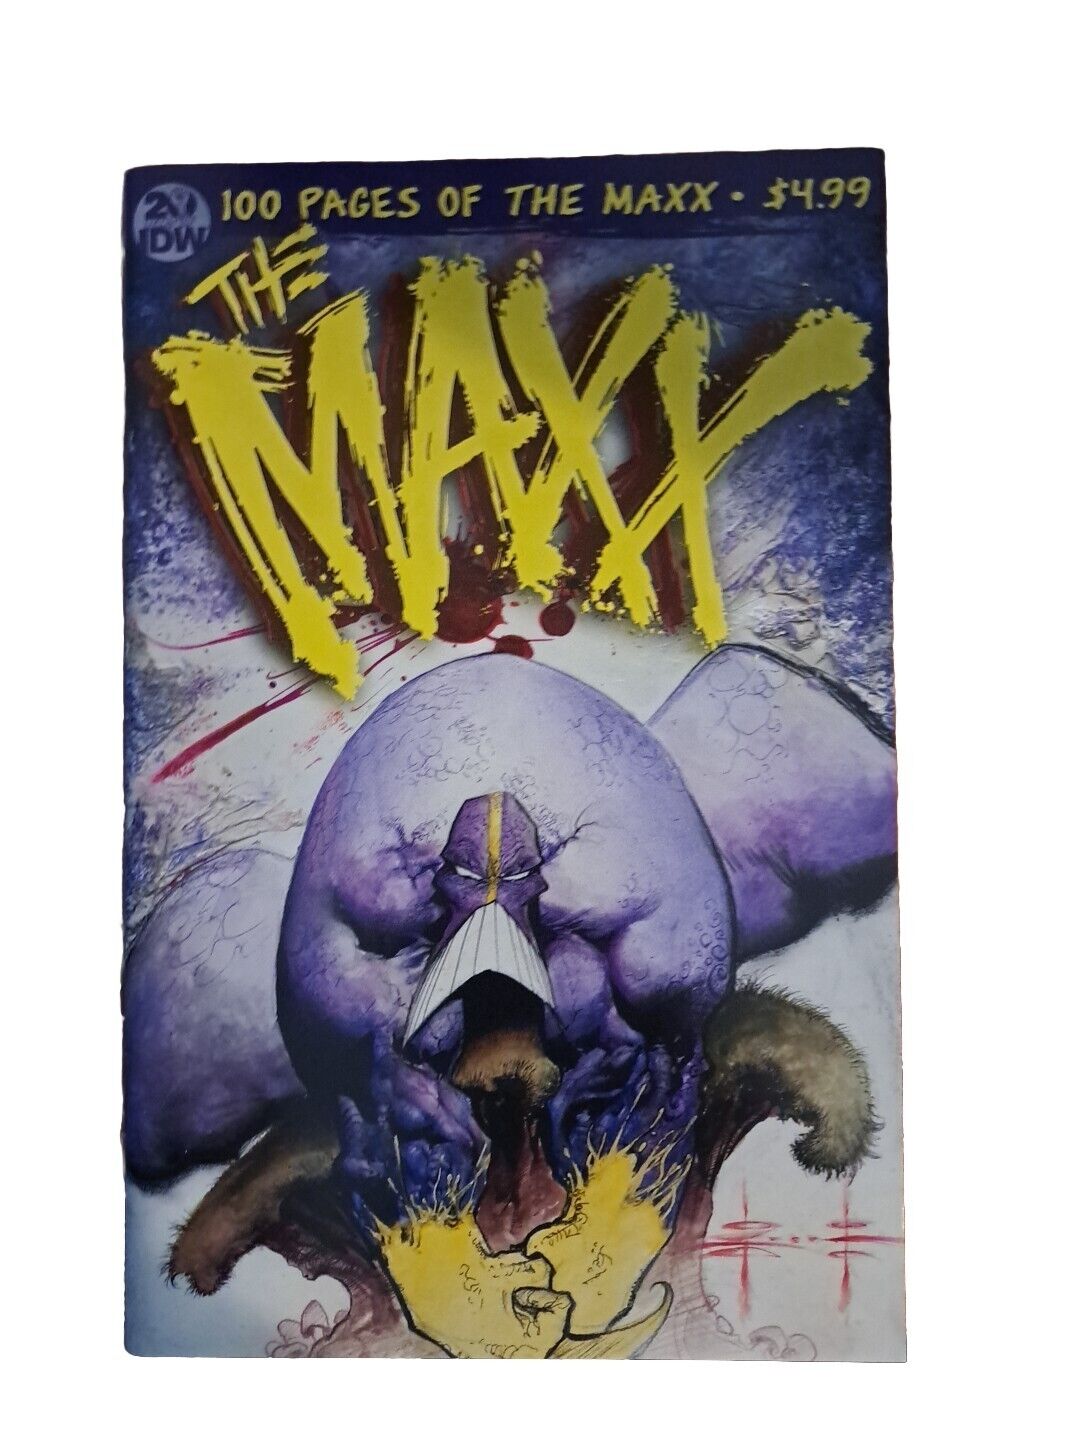 THE MAXX MAXXIMIZED # 1 NM IDW PUBLICATIONS 2013 SAM KIETH